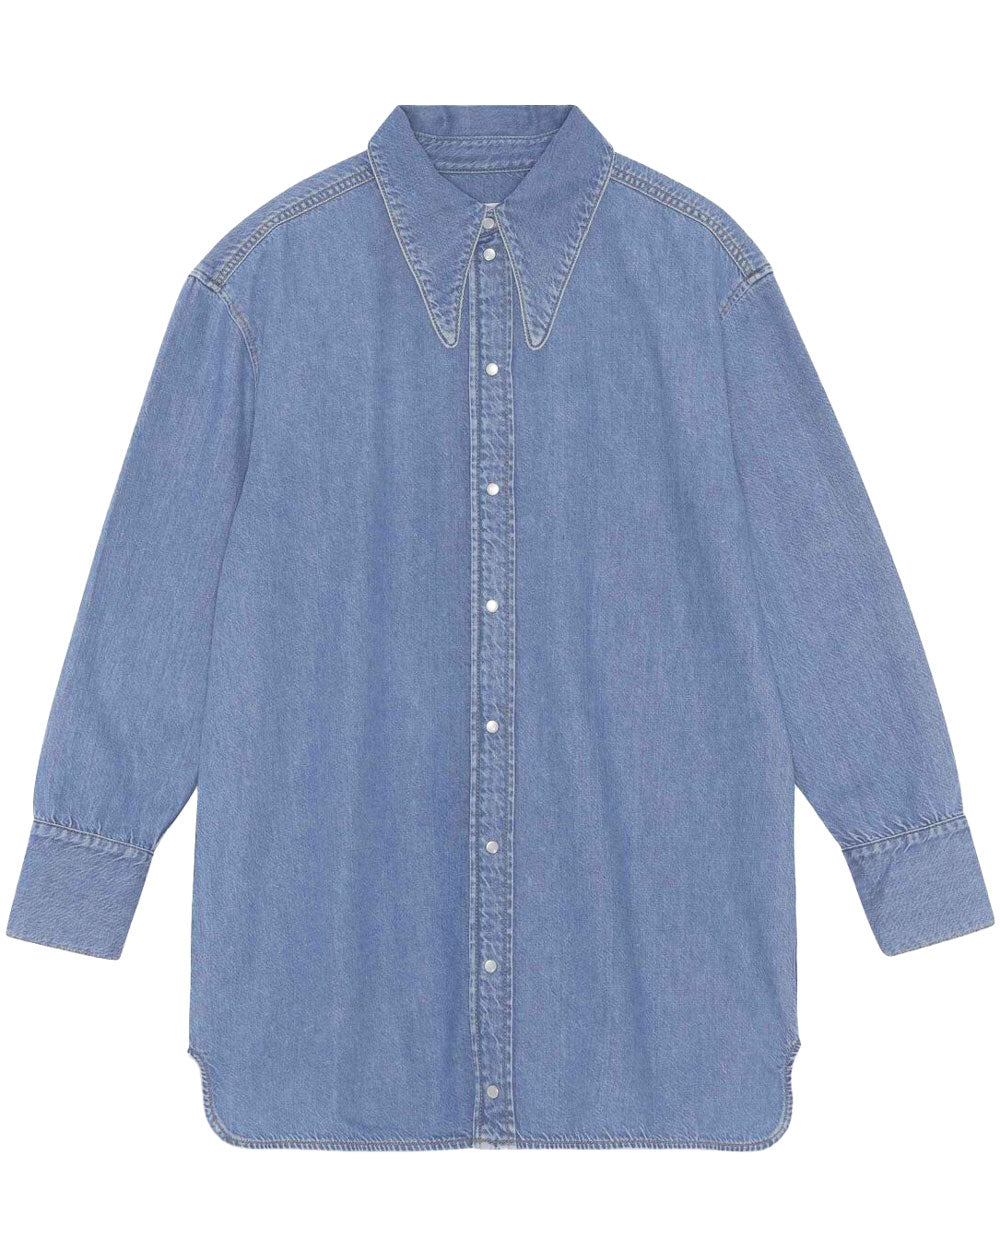 Mid Blue Vintage Denim Shirt Dress